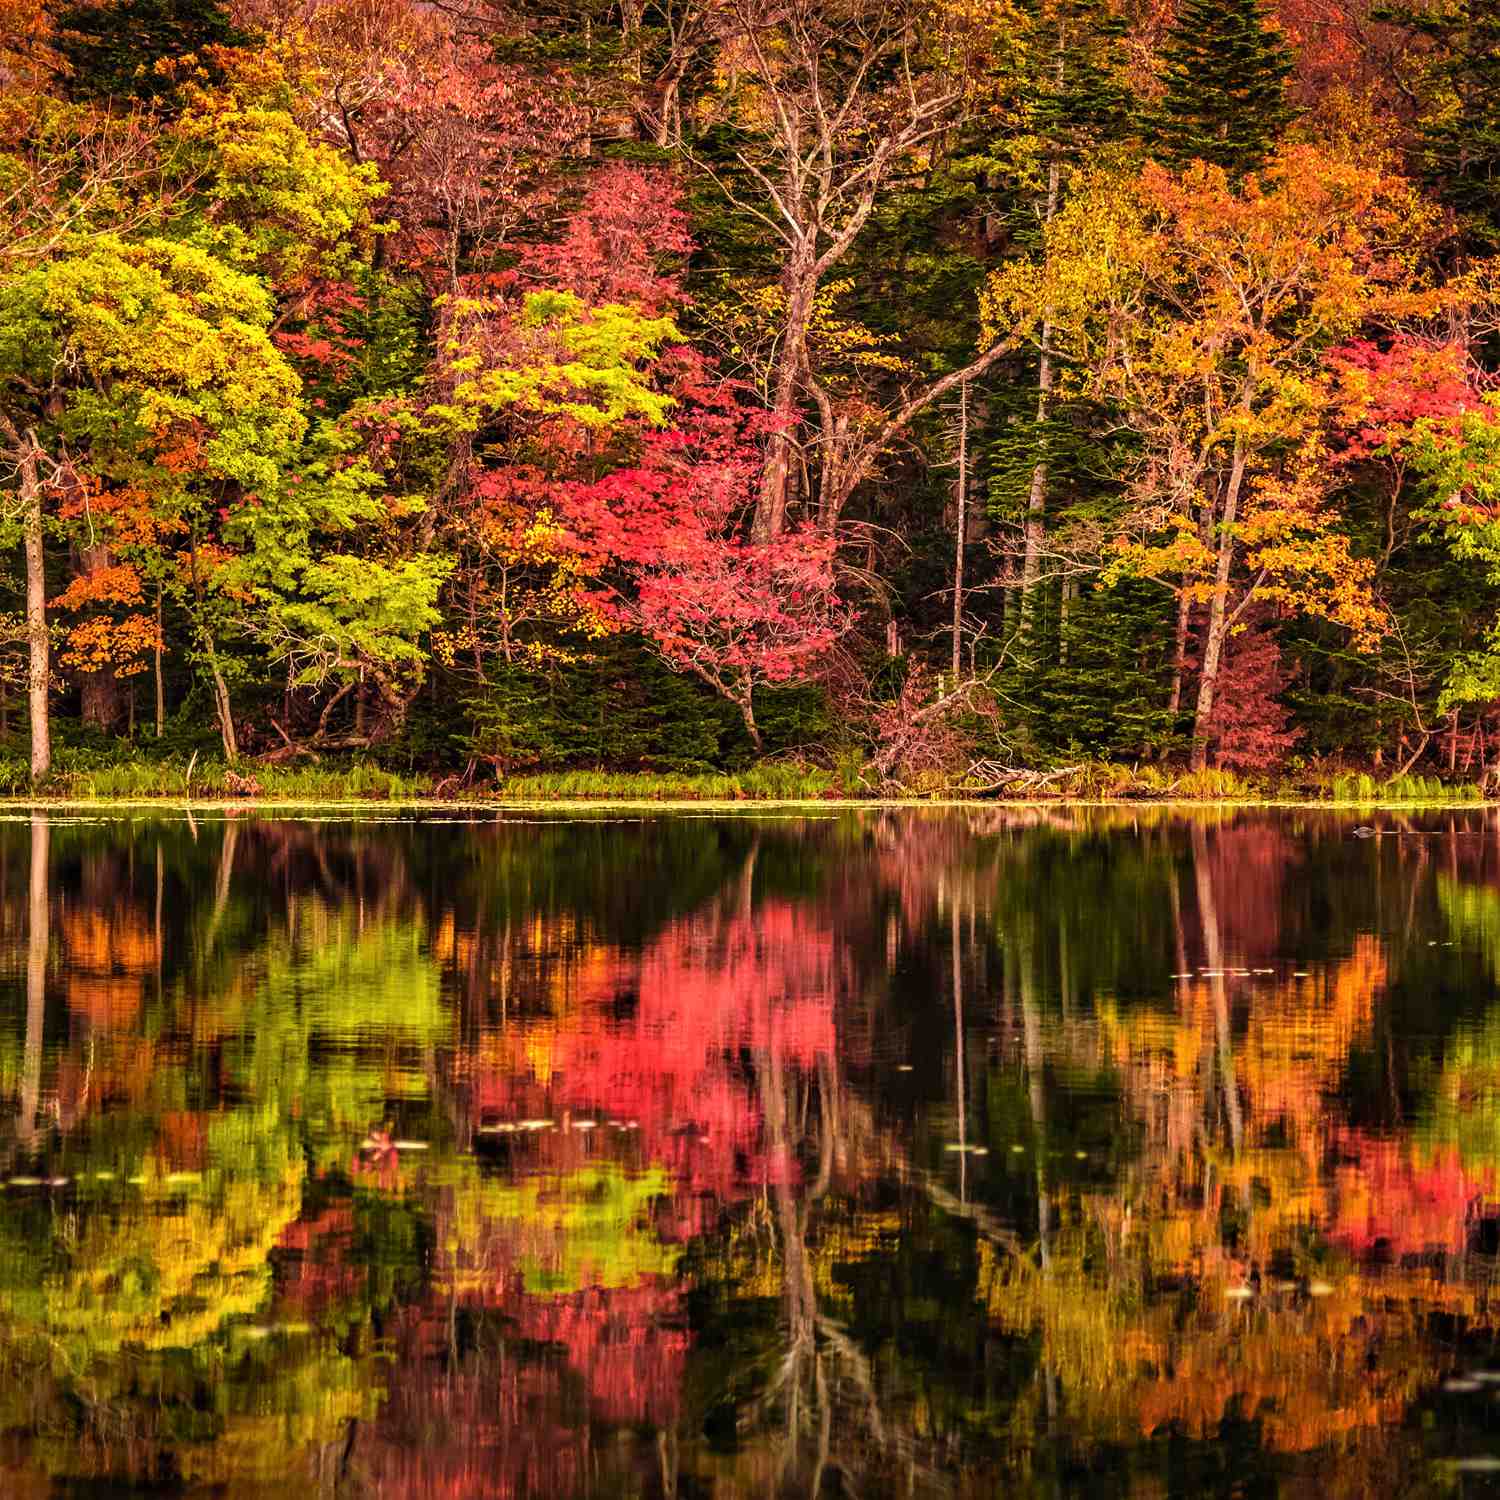 Autumn colors at a lake in Shireteko Five lakes park, Hokkaido = Shutterstock